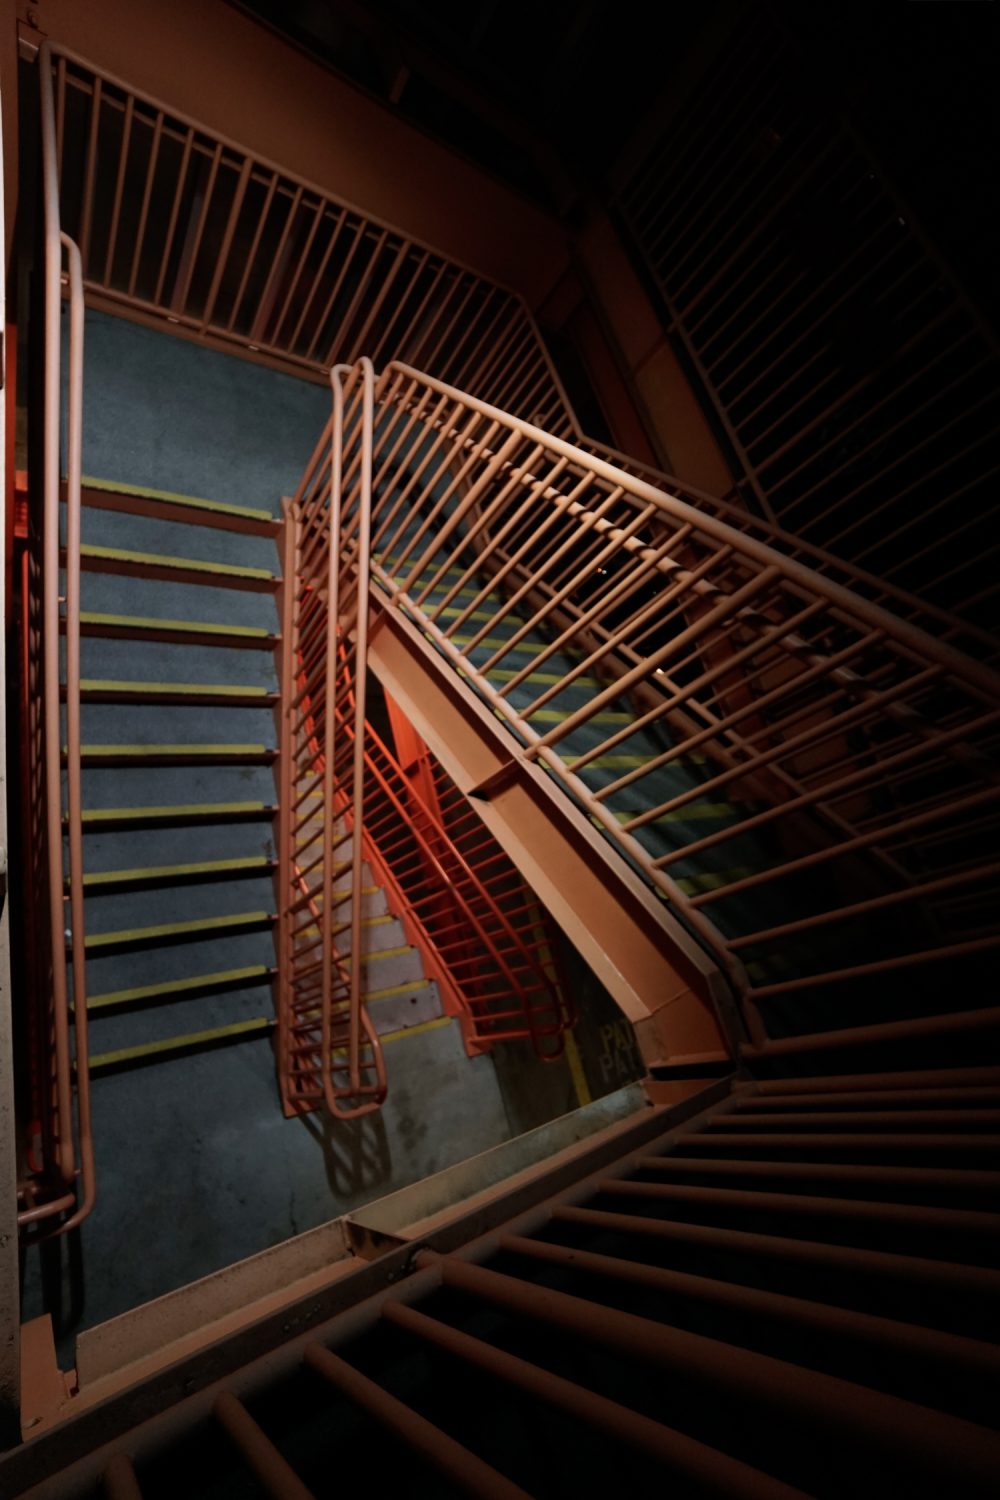 Abe Eddy, Stairs, 2019, digital photograph